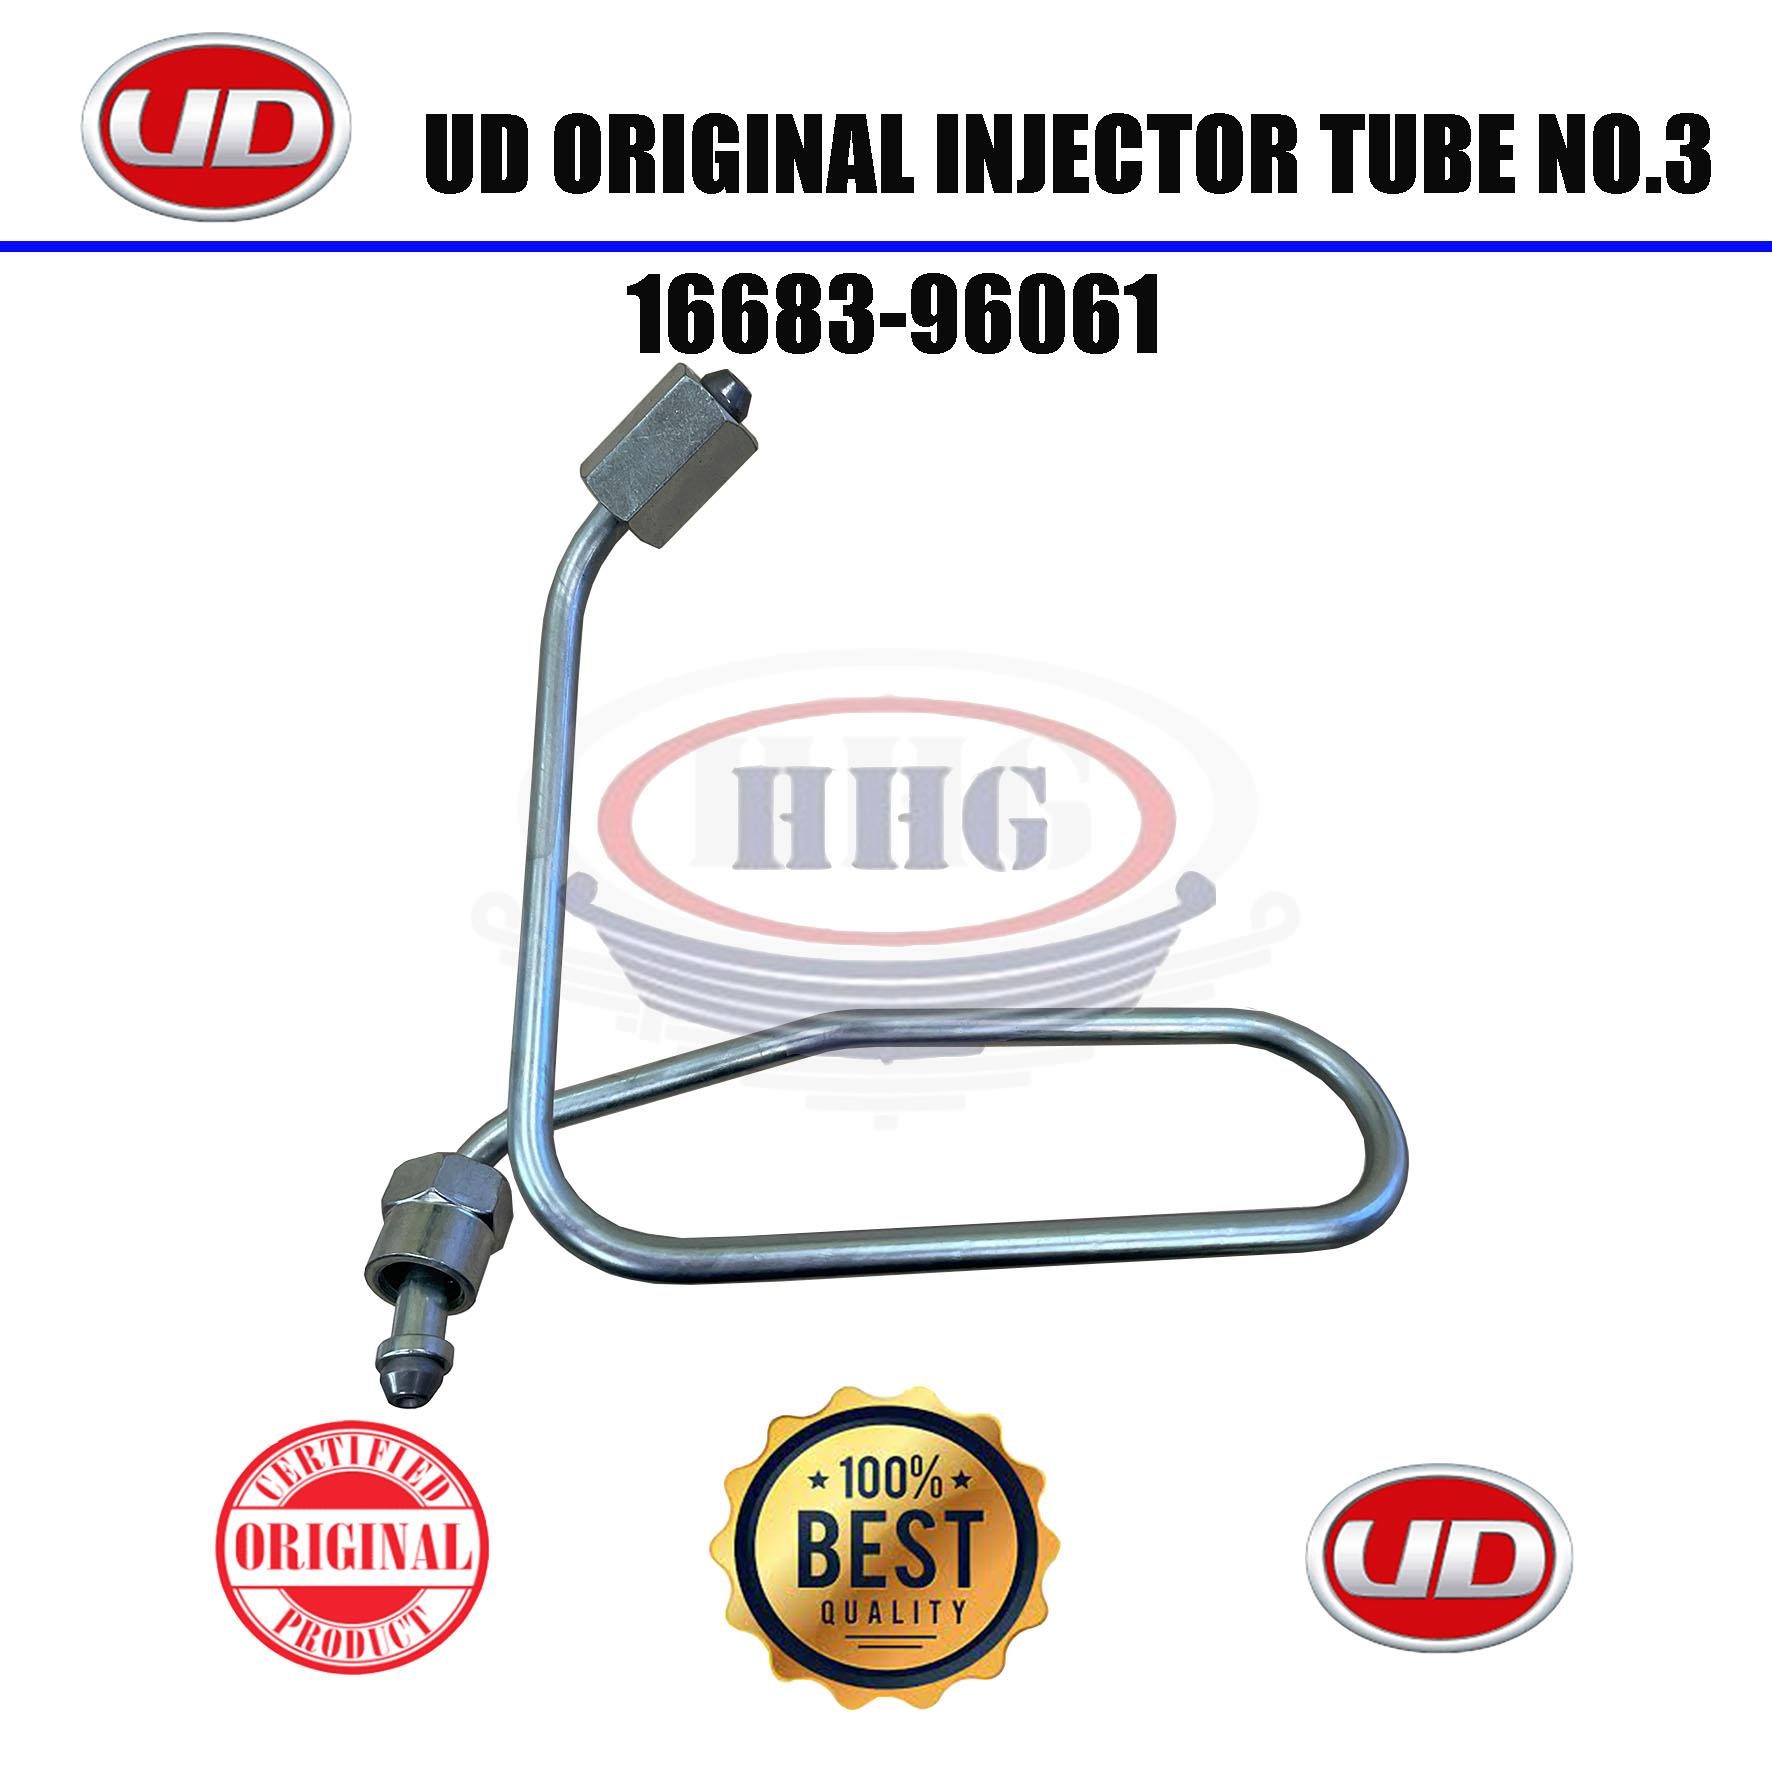 UD Original PE6T Injector Tube No.3 (16683-96061)